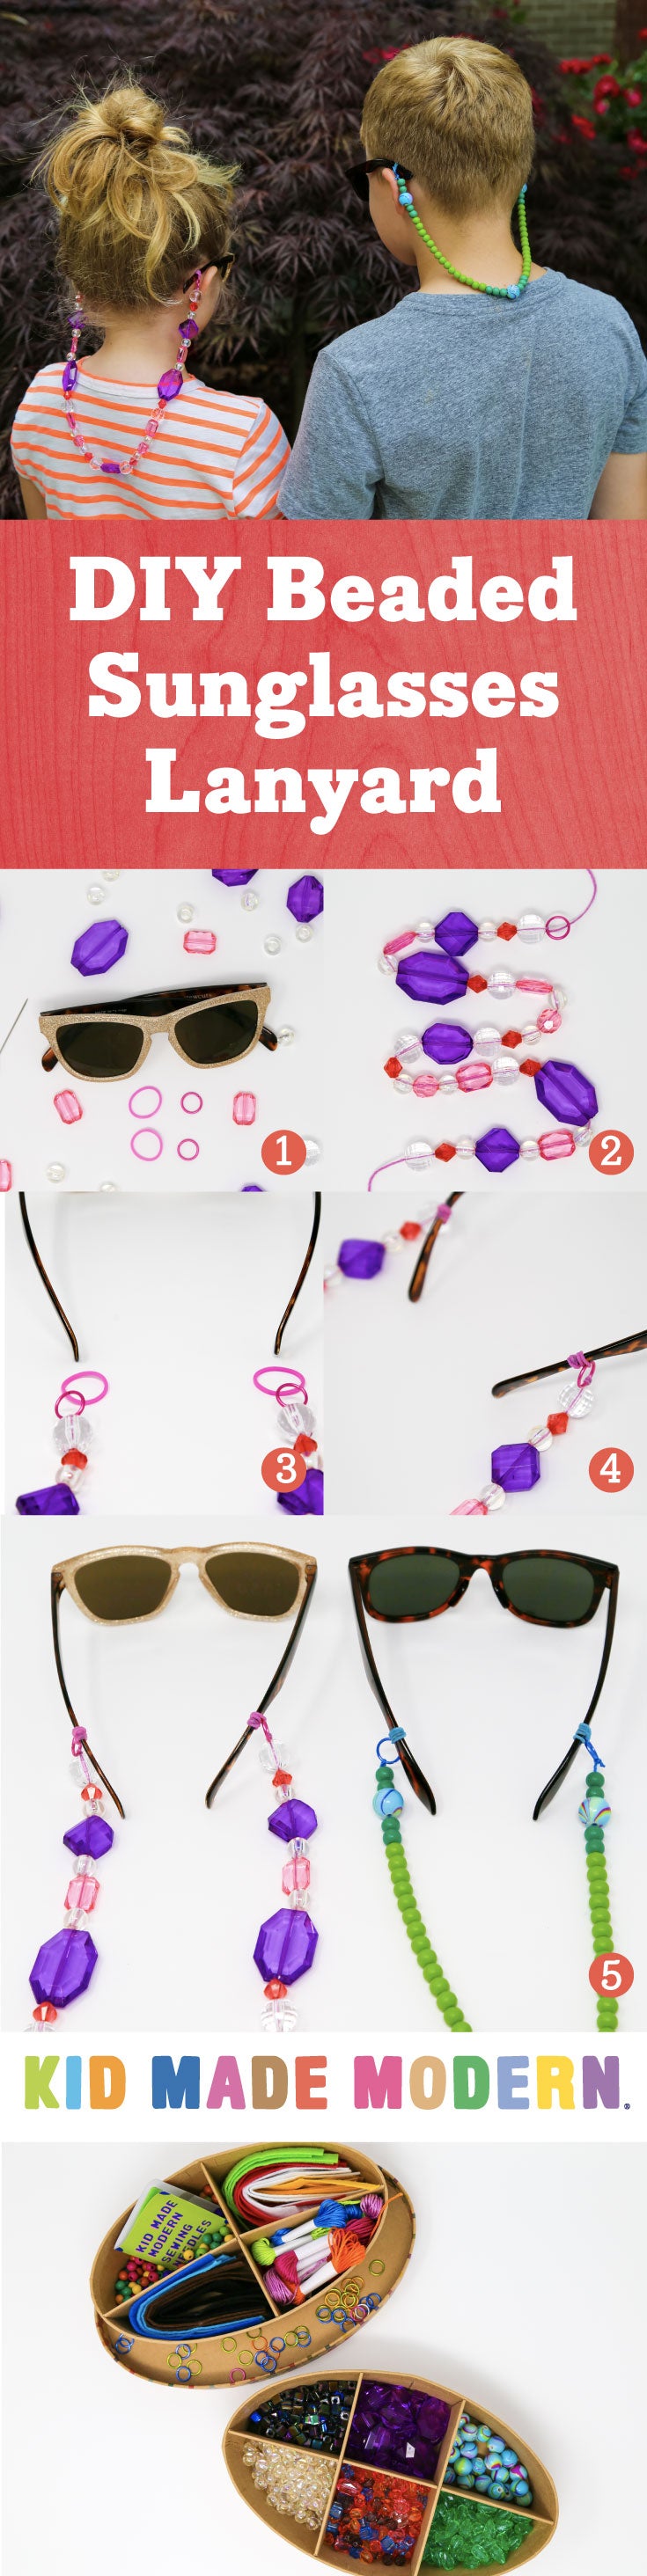 Beaded Sunglasses Lanyard Pinterest